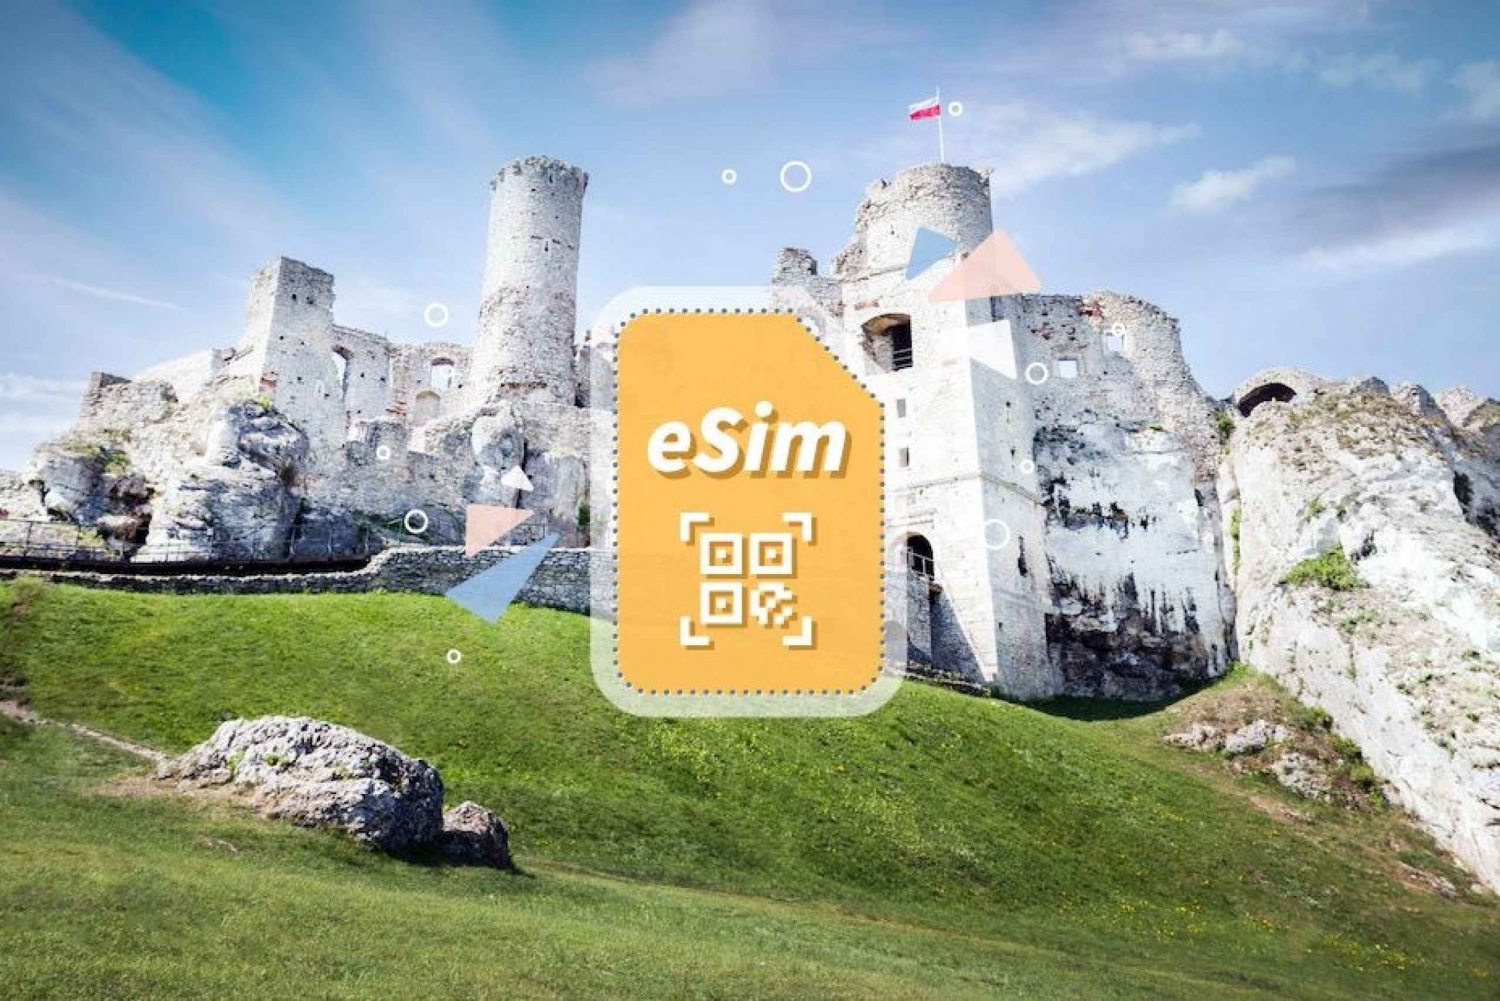 Polen/Europa: 5G eSim mobiel data-abonnement